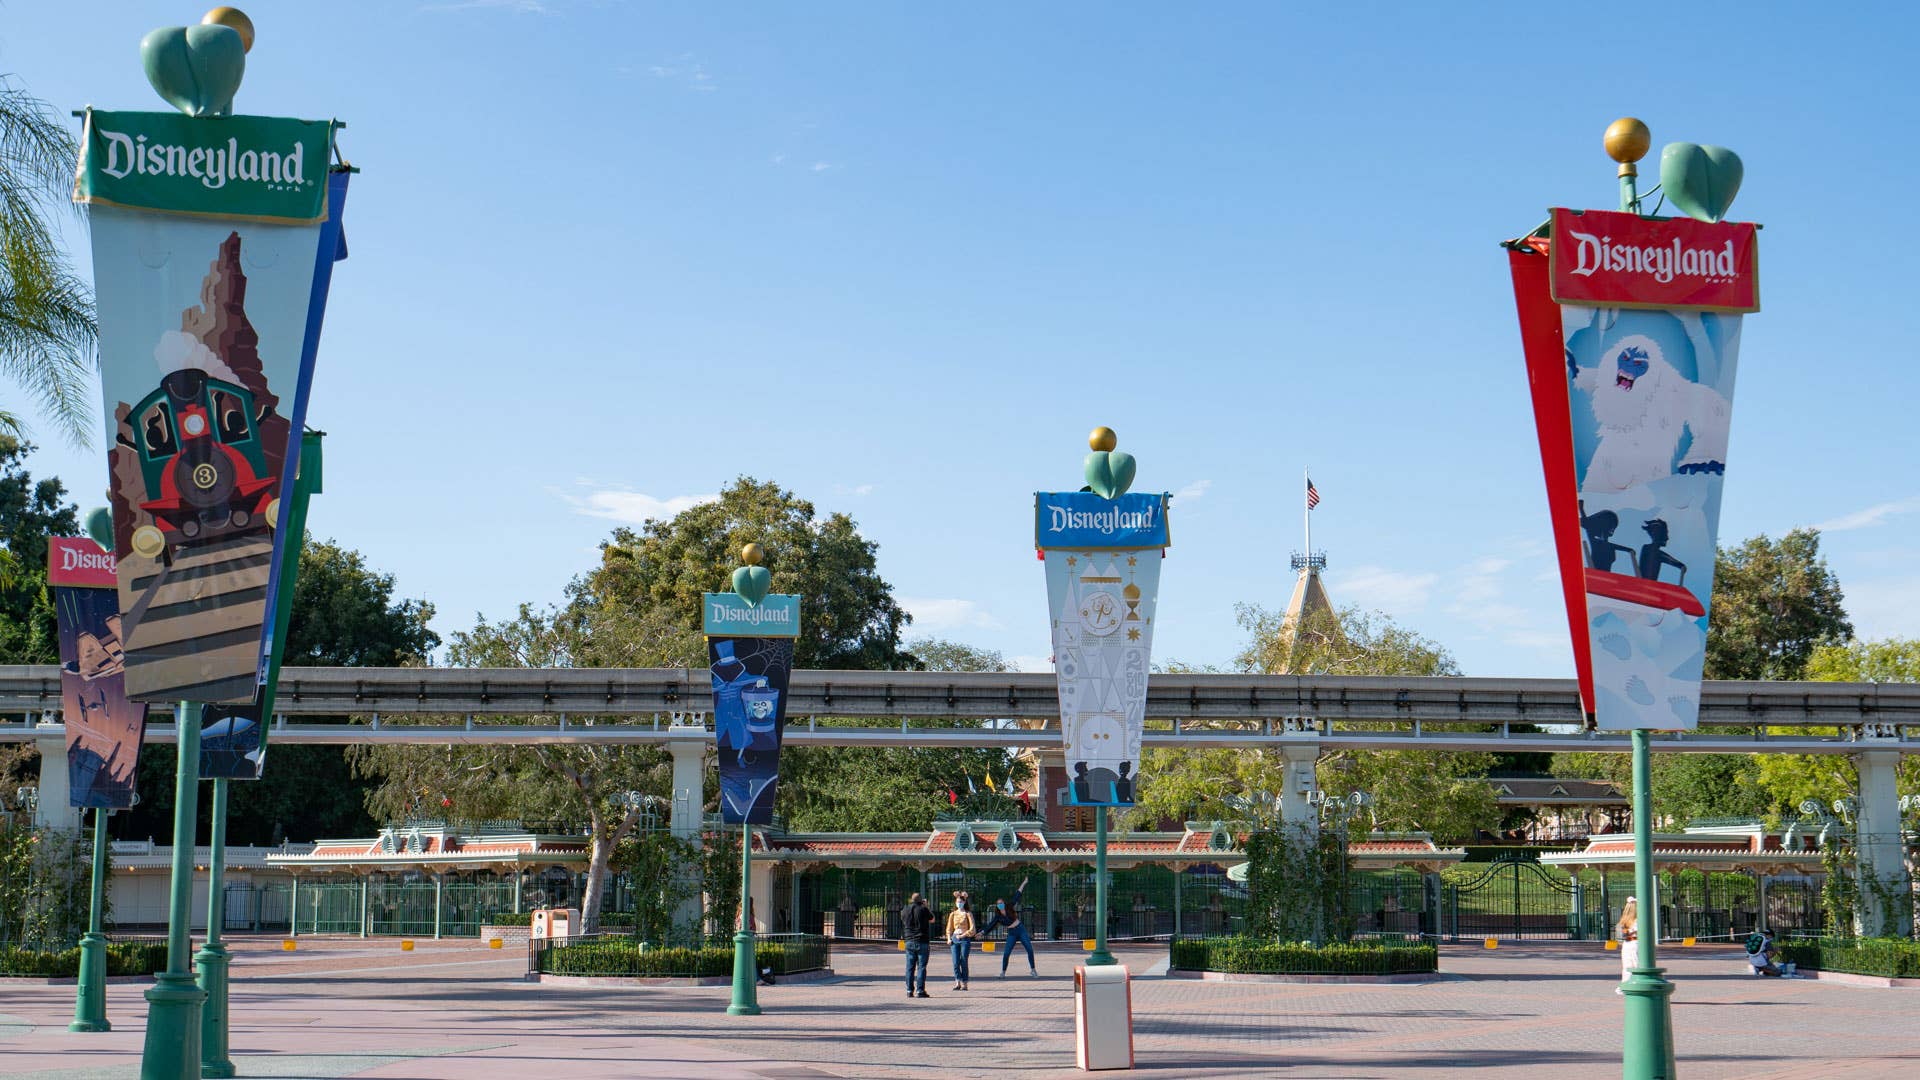 General views of the Disneyland theme park.